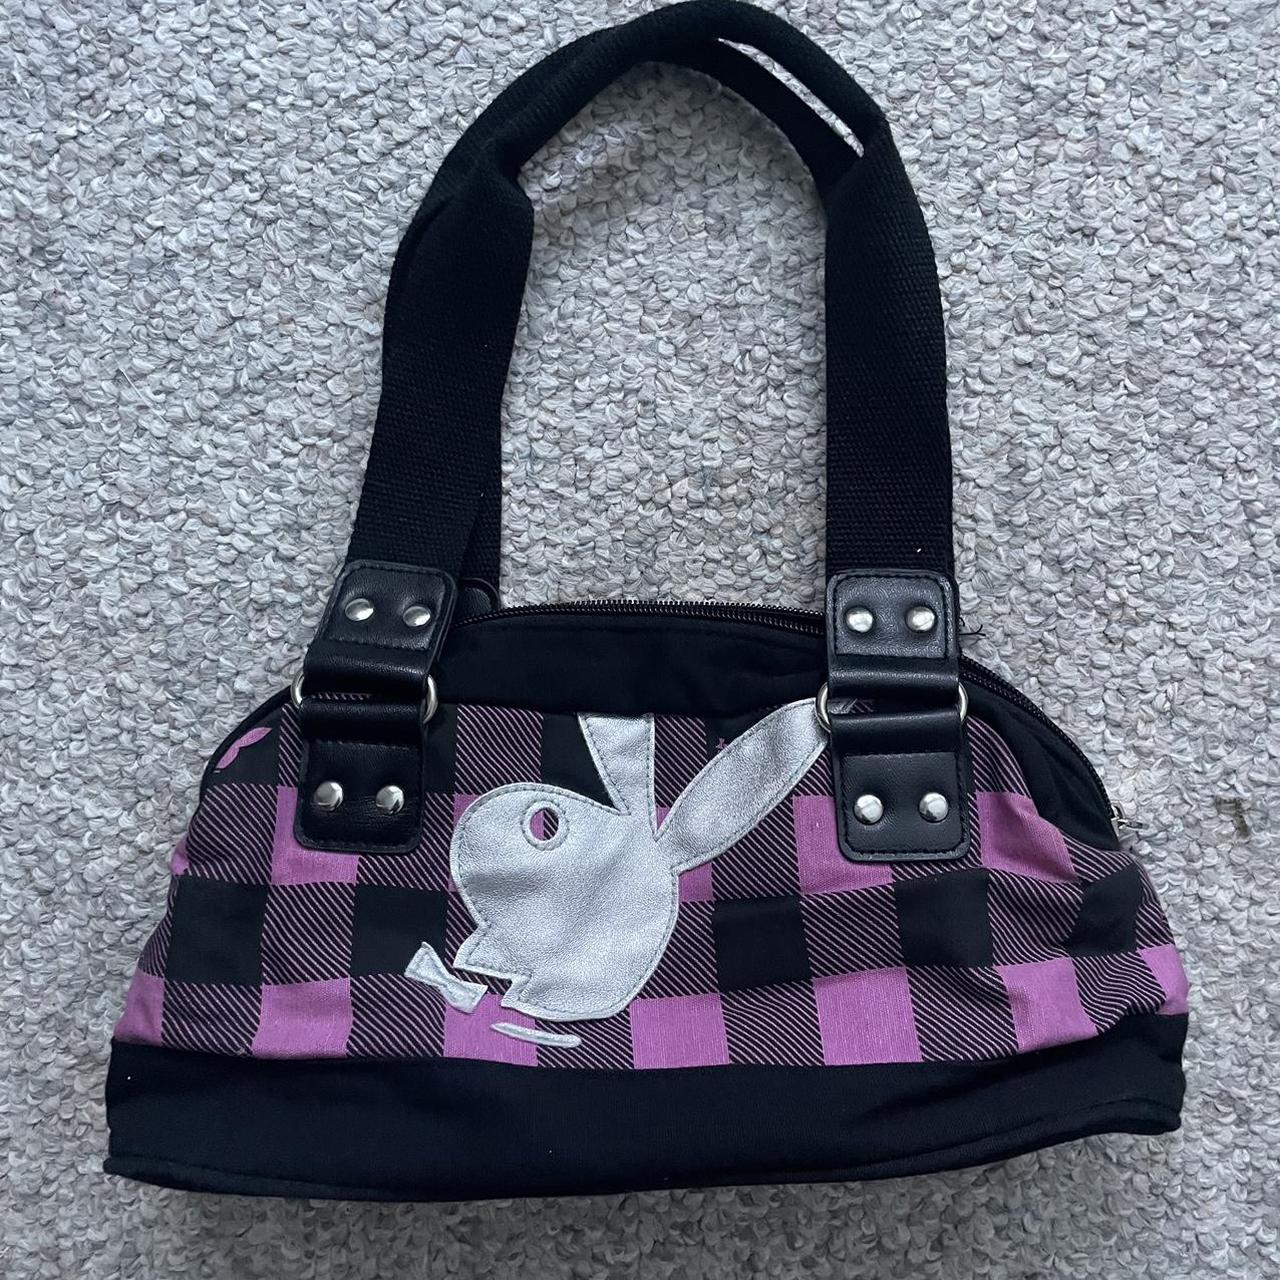 playboy bunny women bag - Buy playboy bunny women bag at Best